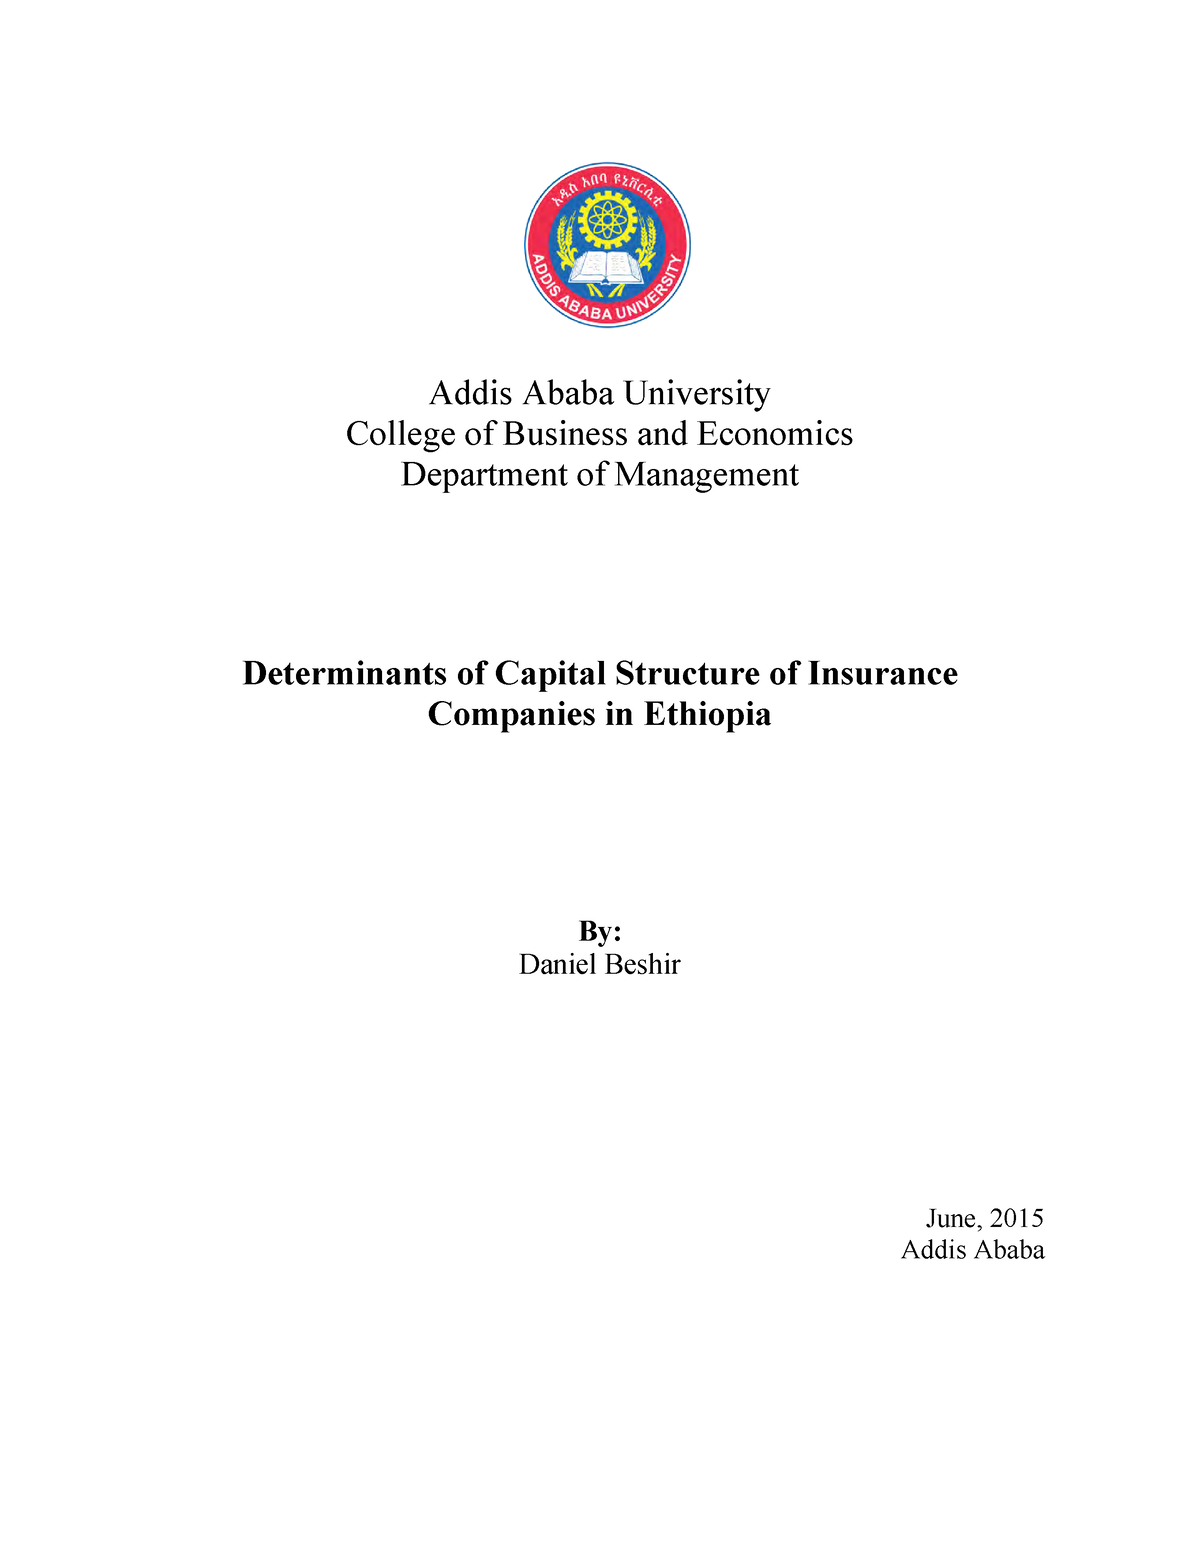 mba thesis addis ababa university pdf free download